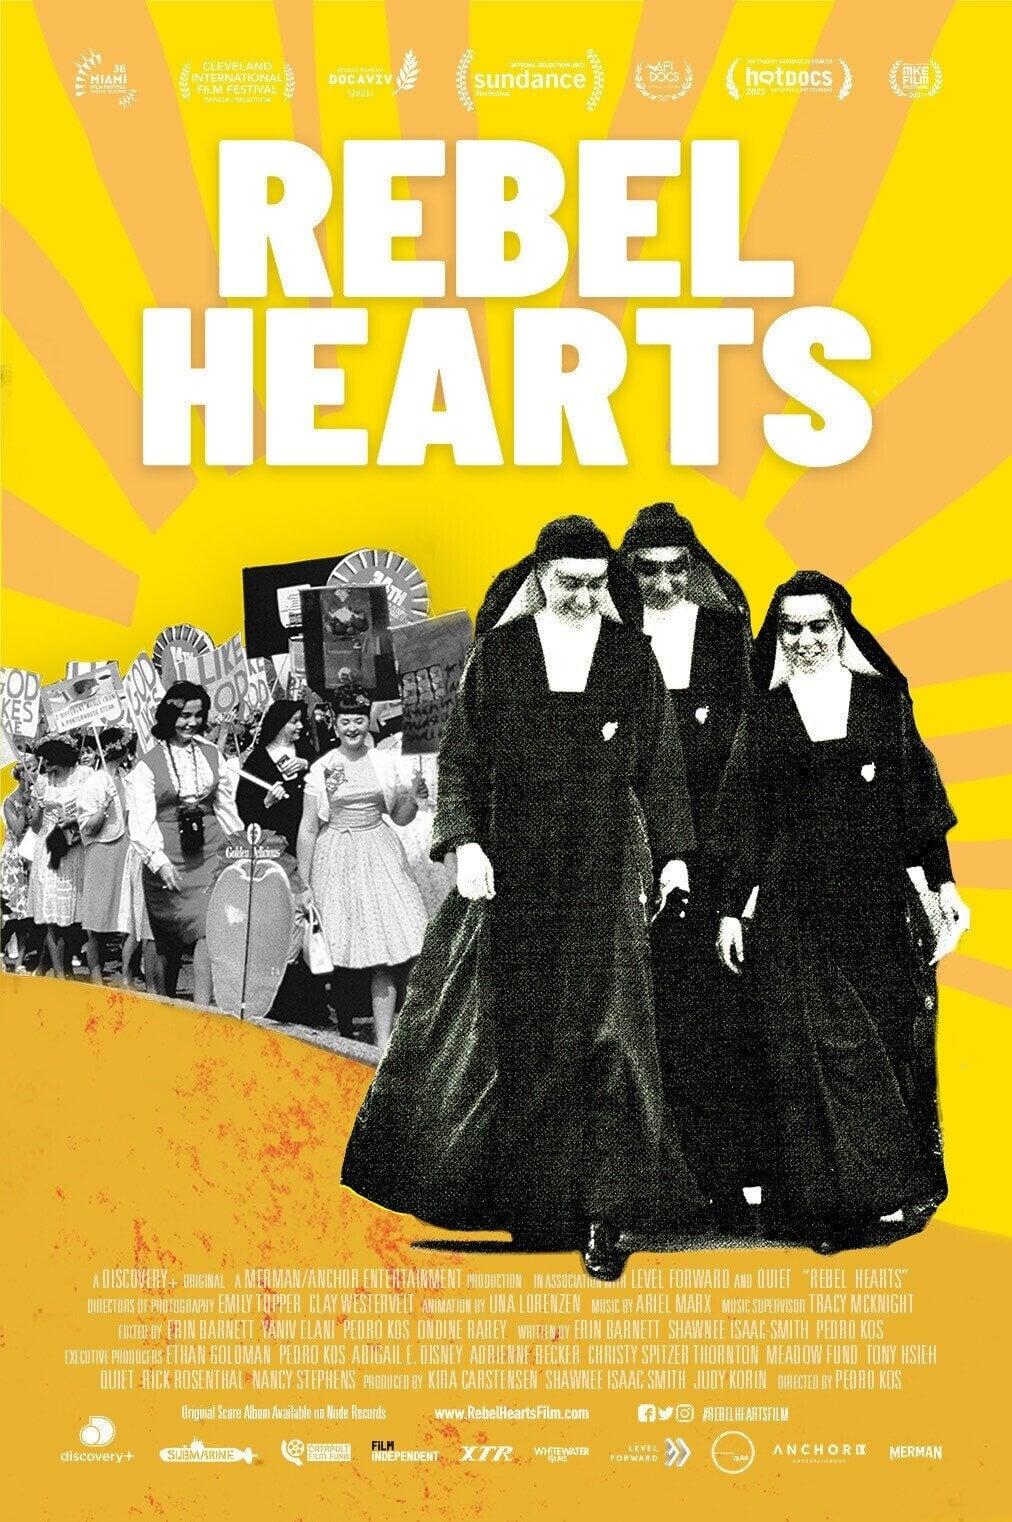 Rebel Hearts poster